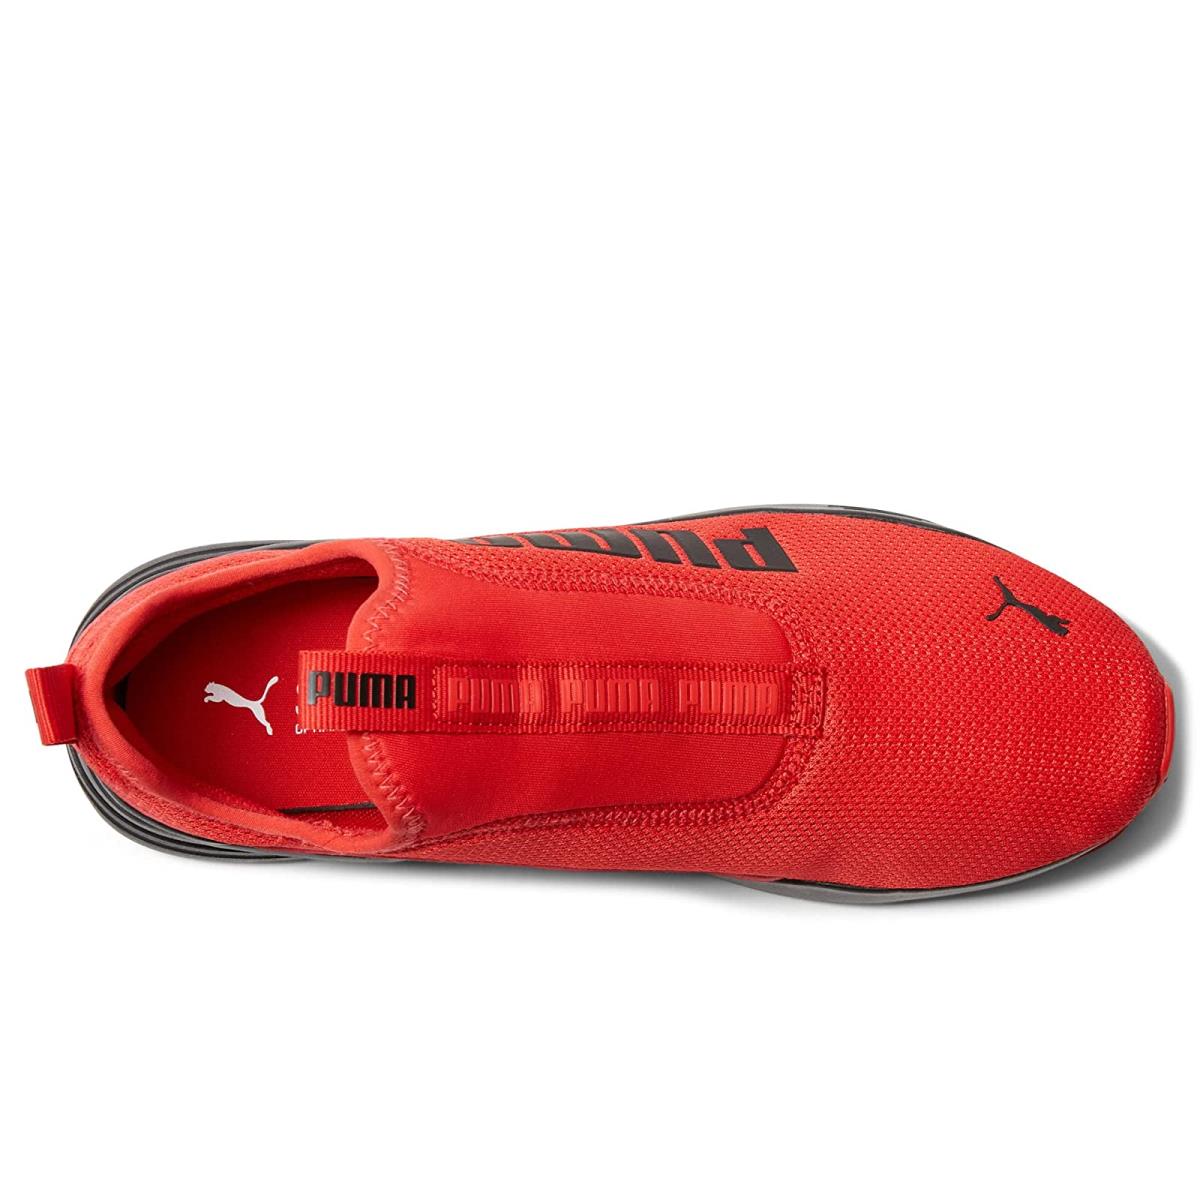 Puma shoes  - Red 7